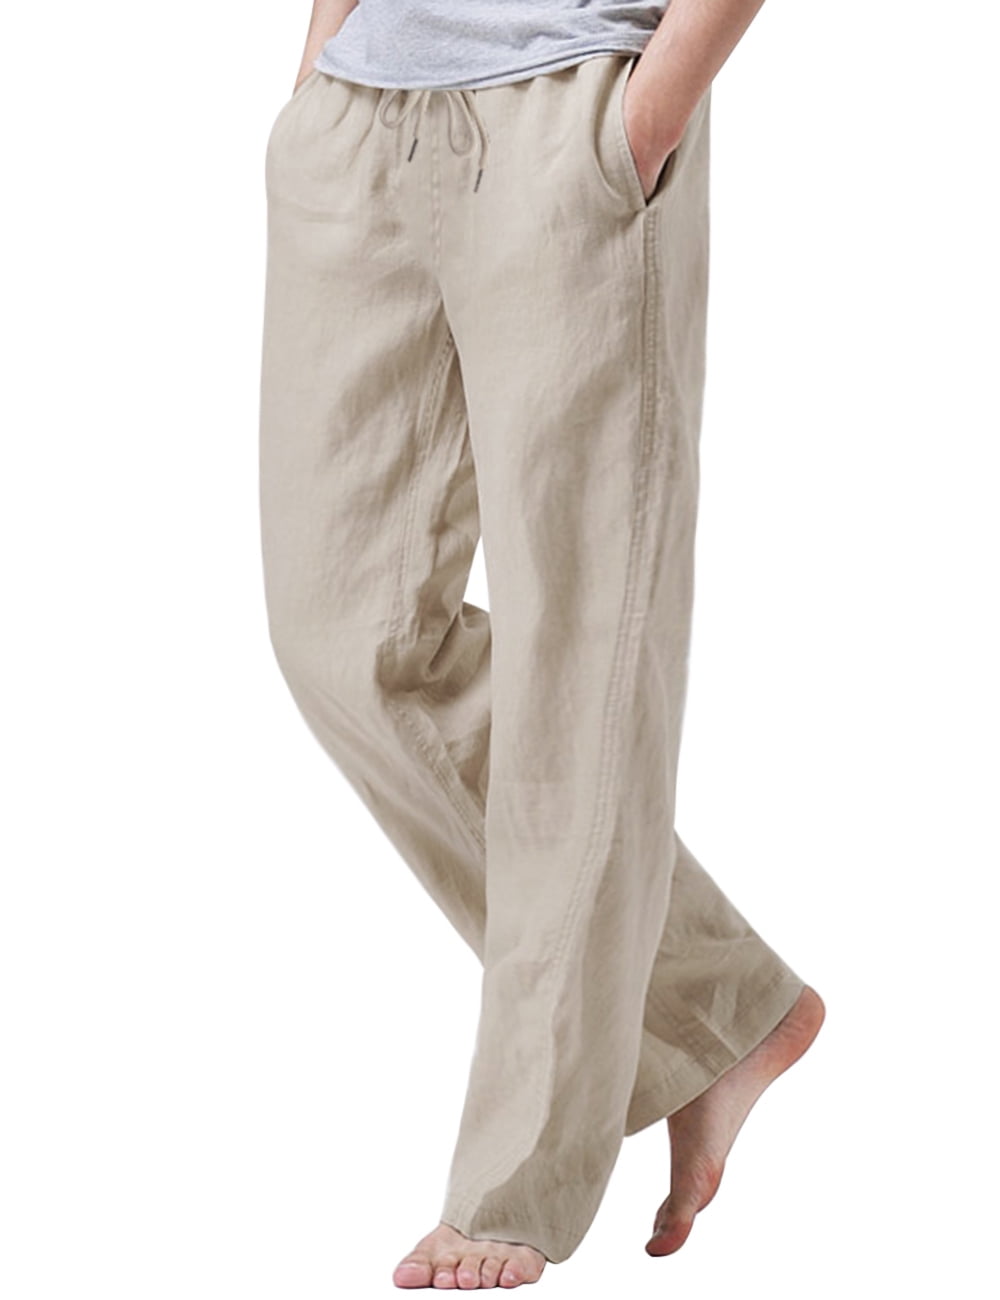 ZHENWEI Mens Cotton Linen Drawstring Pants Elastic Waist Casual Jogger Yoga  Pants